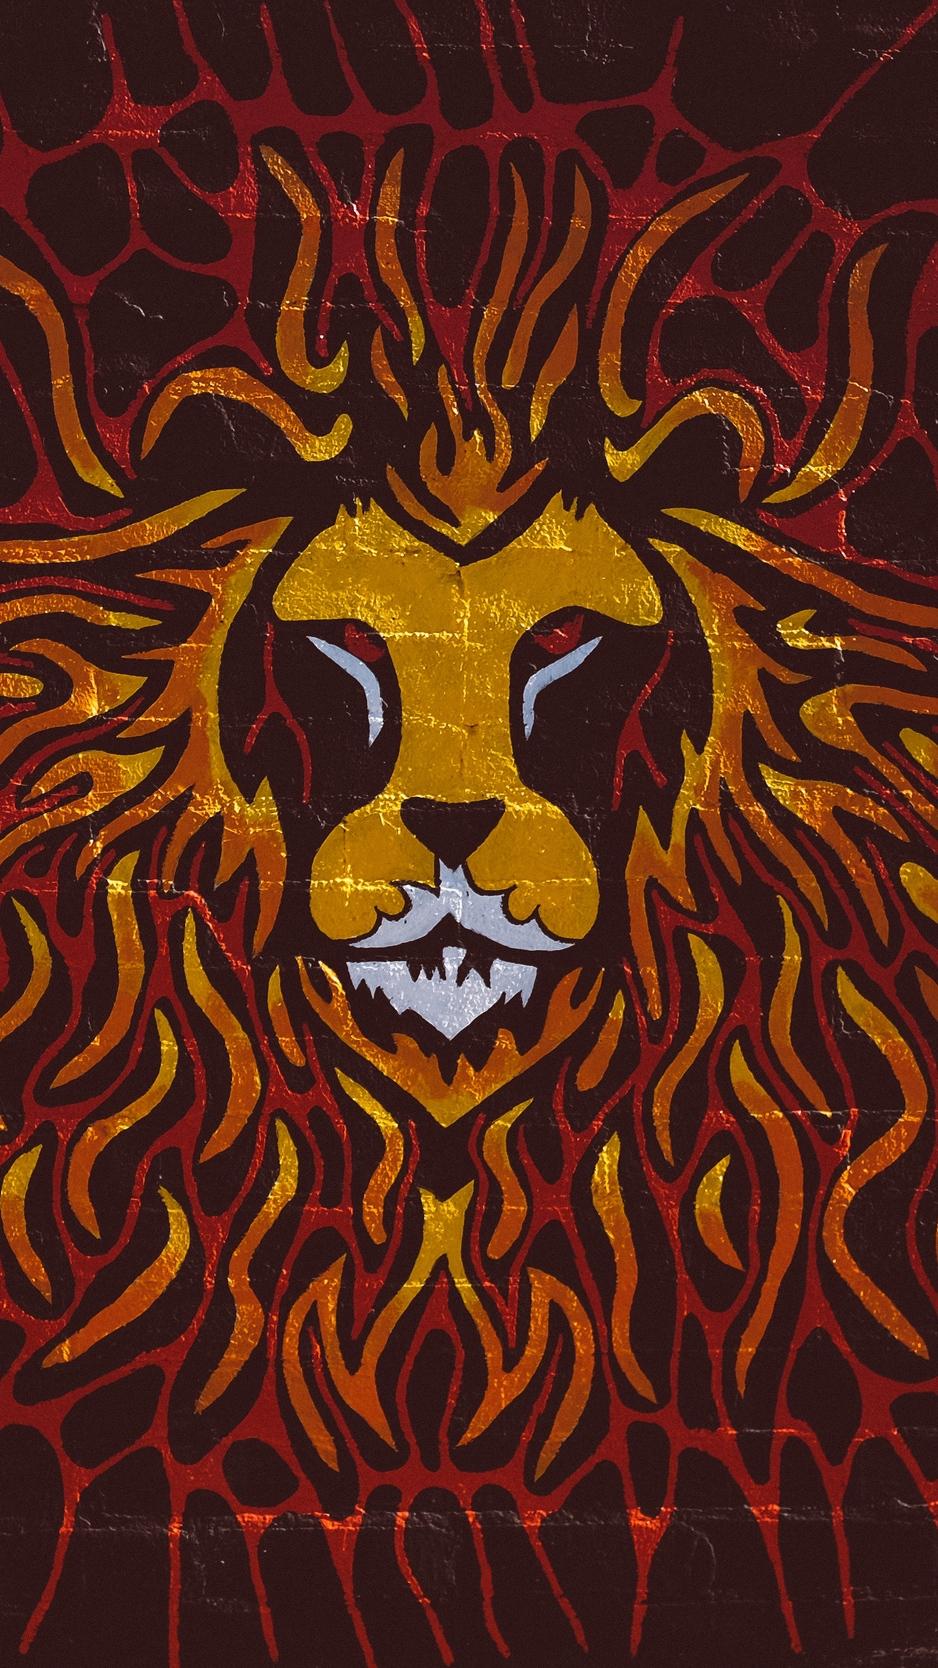 Lion, art, wall, graffiti wallpaper, background iphone